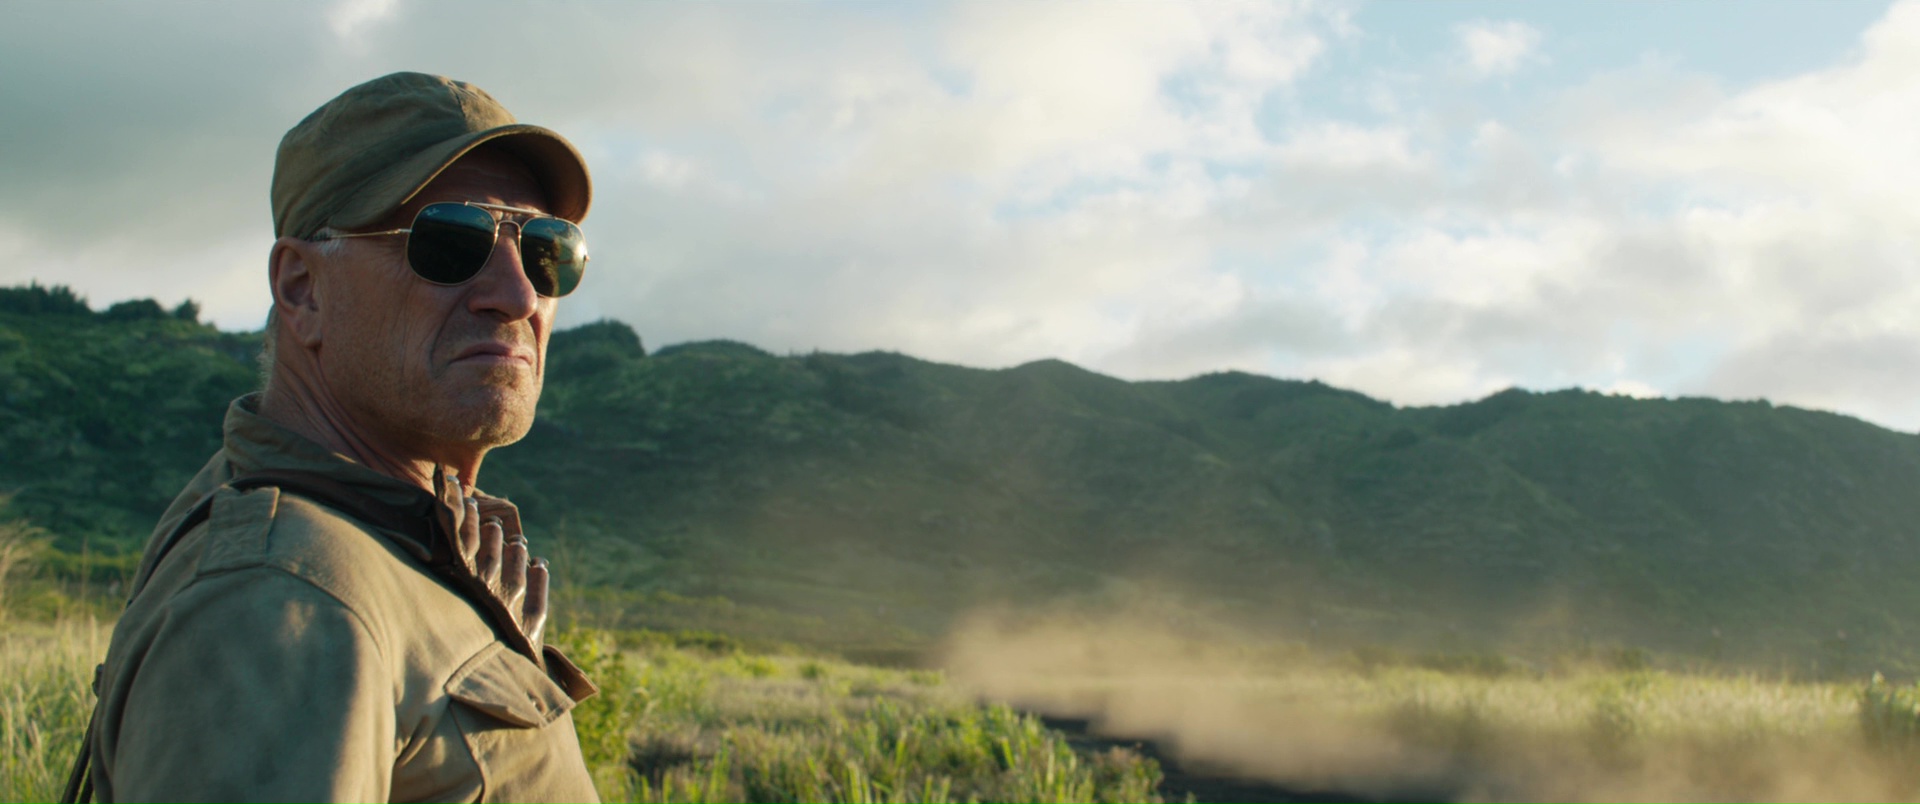 Ray-Ban Sunglasses Worn by Ted Levine in Jurassic World: Fallen Kingdom (2018) Movie